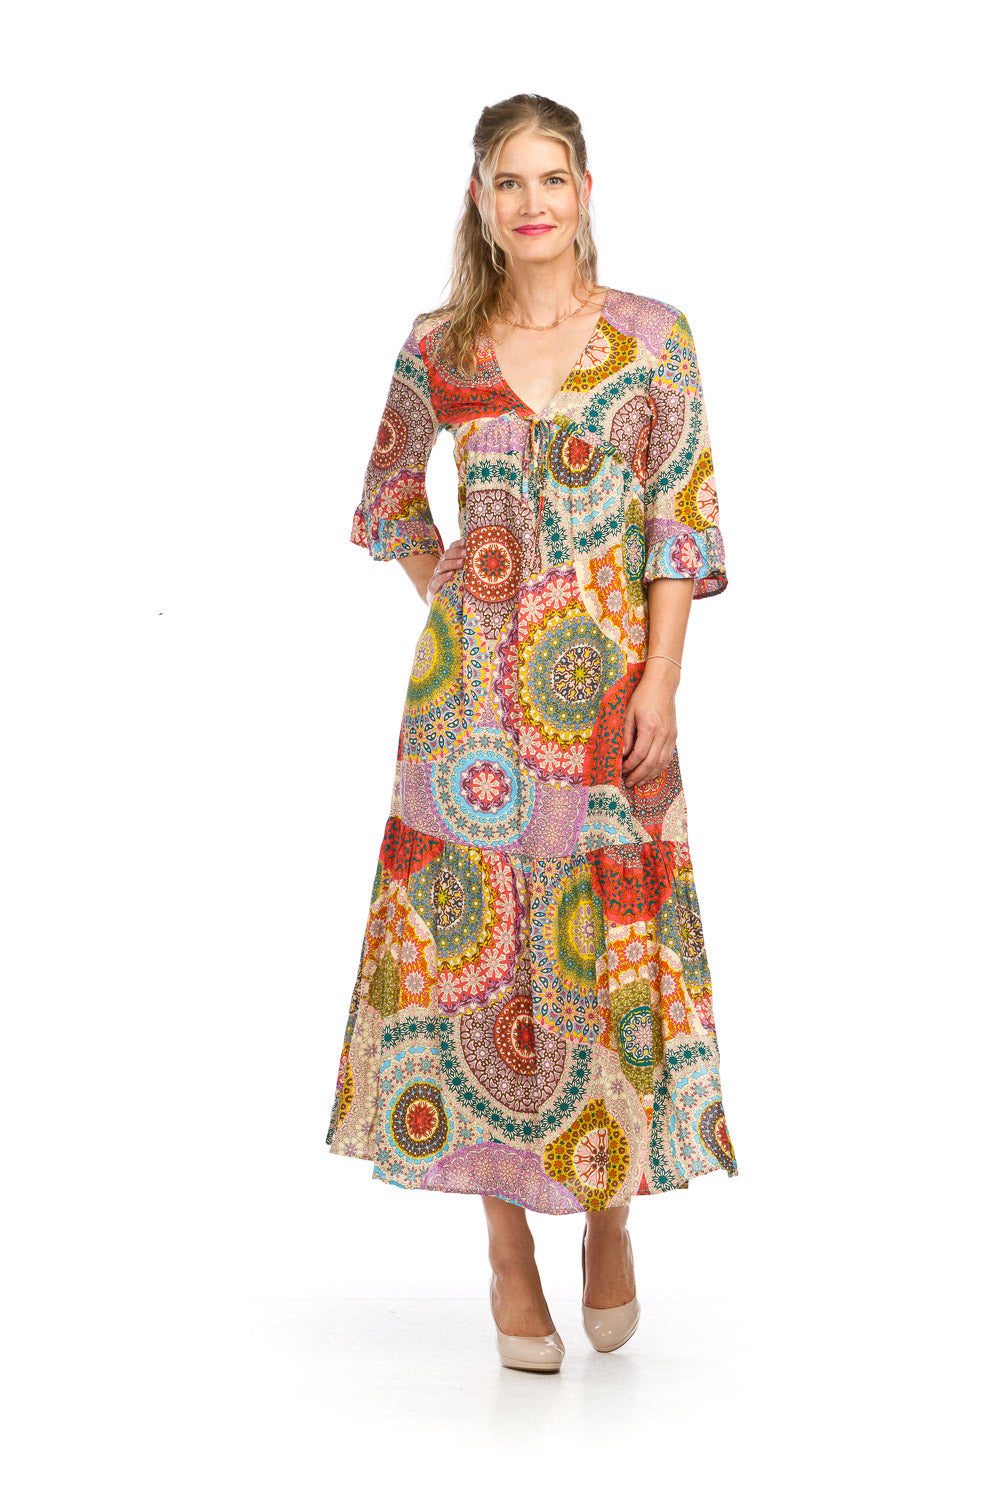 PD16683 MULTI Psychedelic Mandala Printed Empire Waist Dress